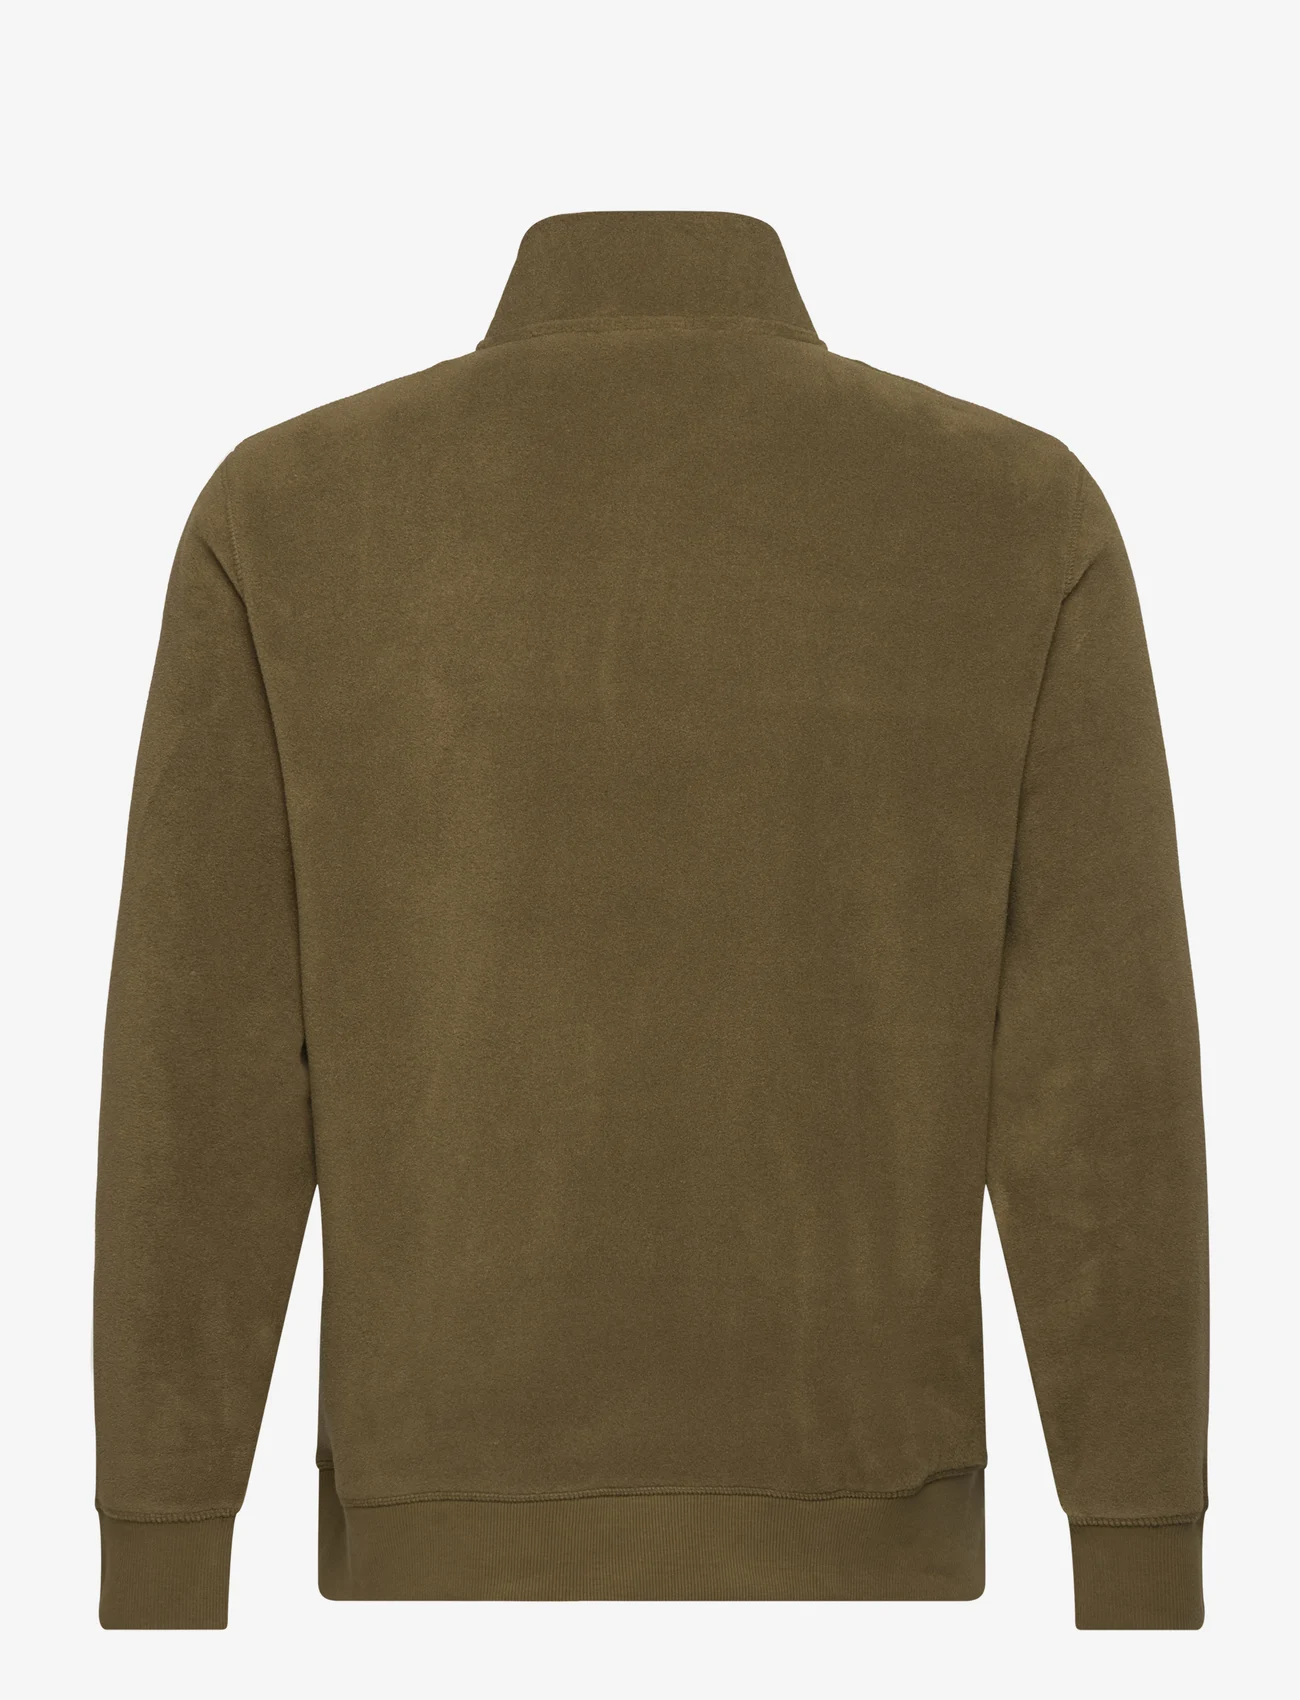 Timberland - Polartec 1/4 Sweatsh - mid layer jackets - dark olive - 1